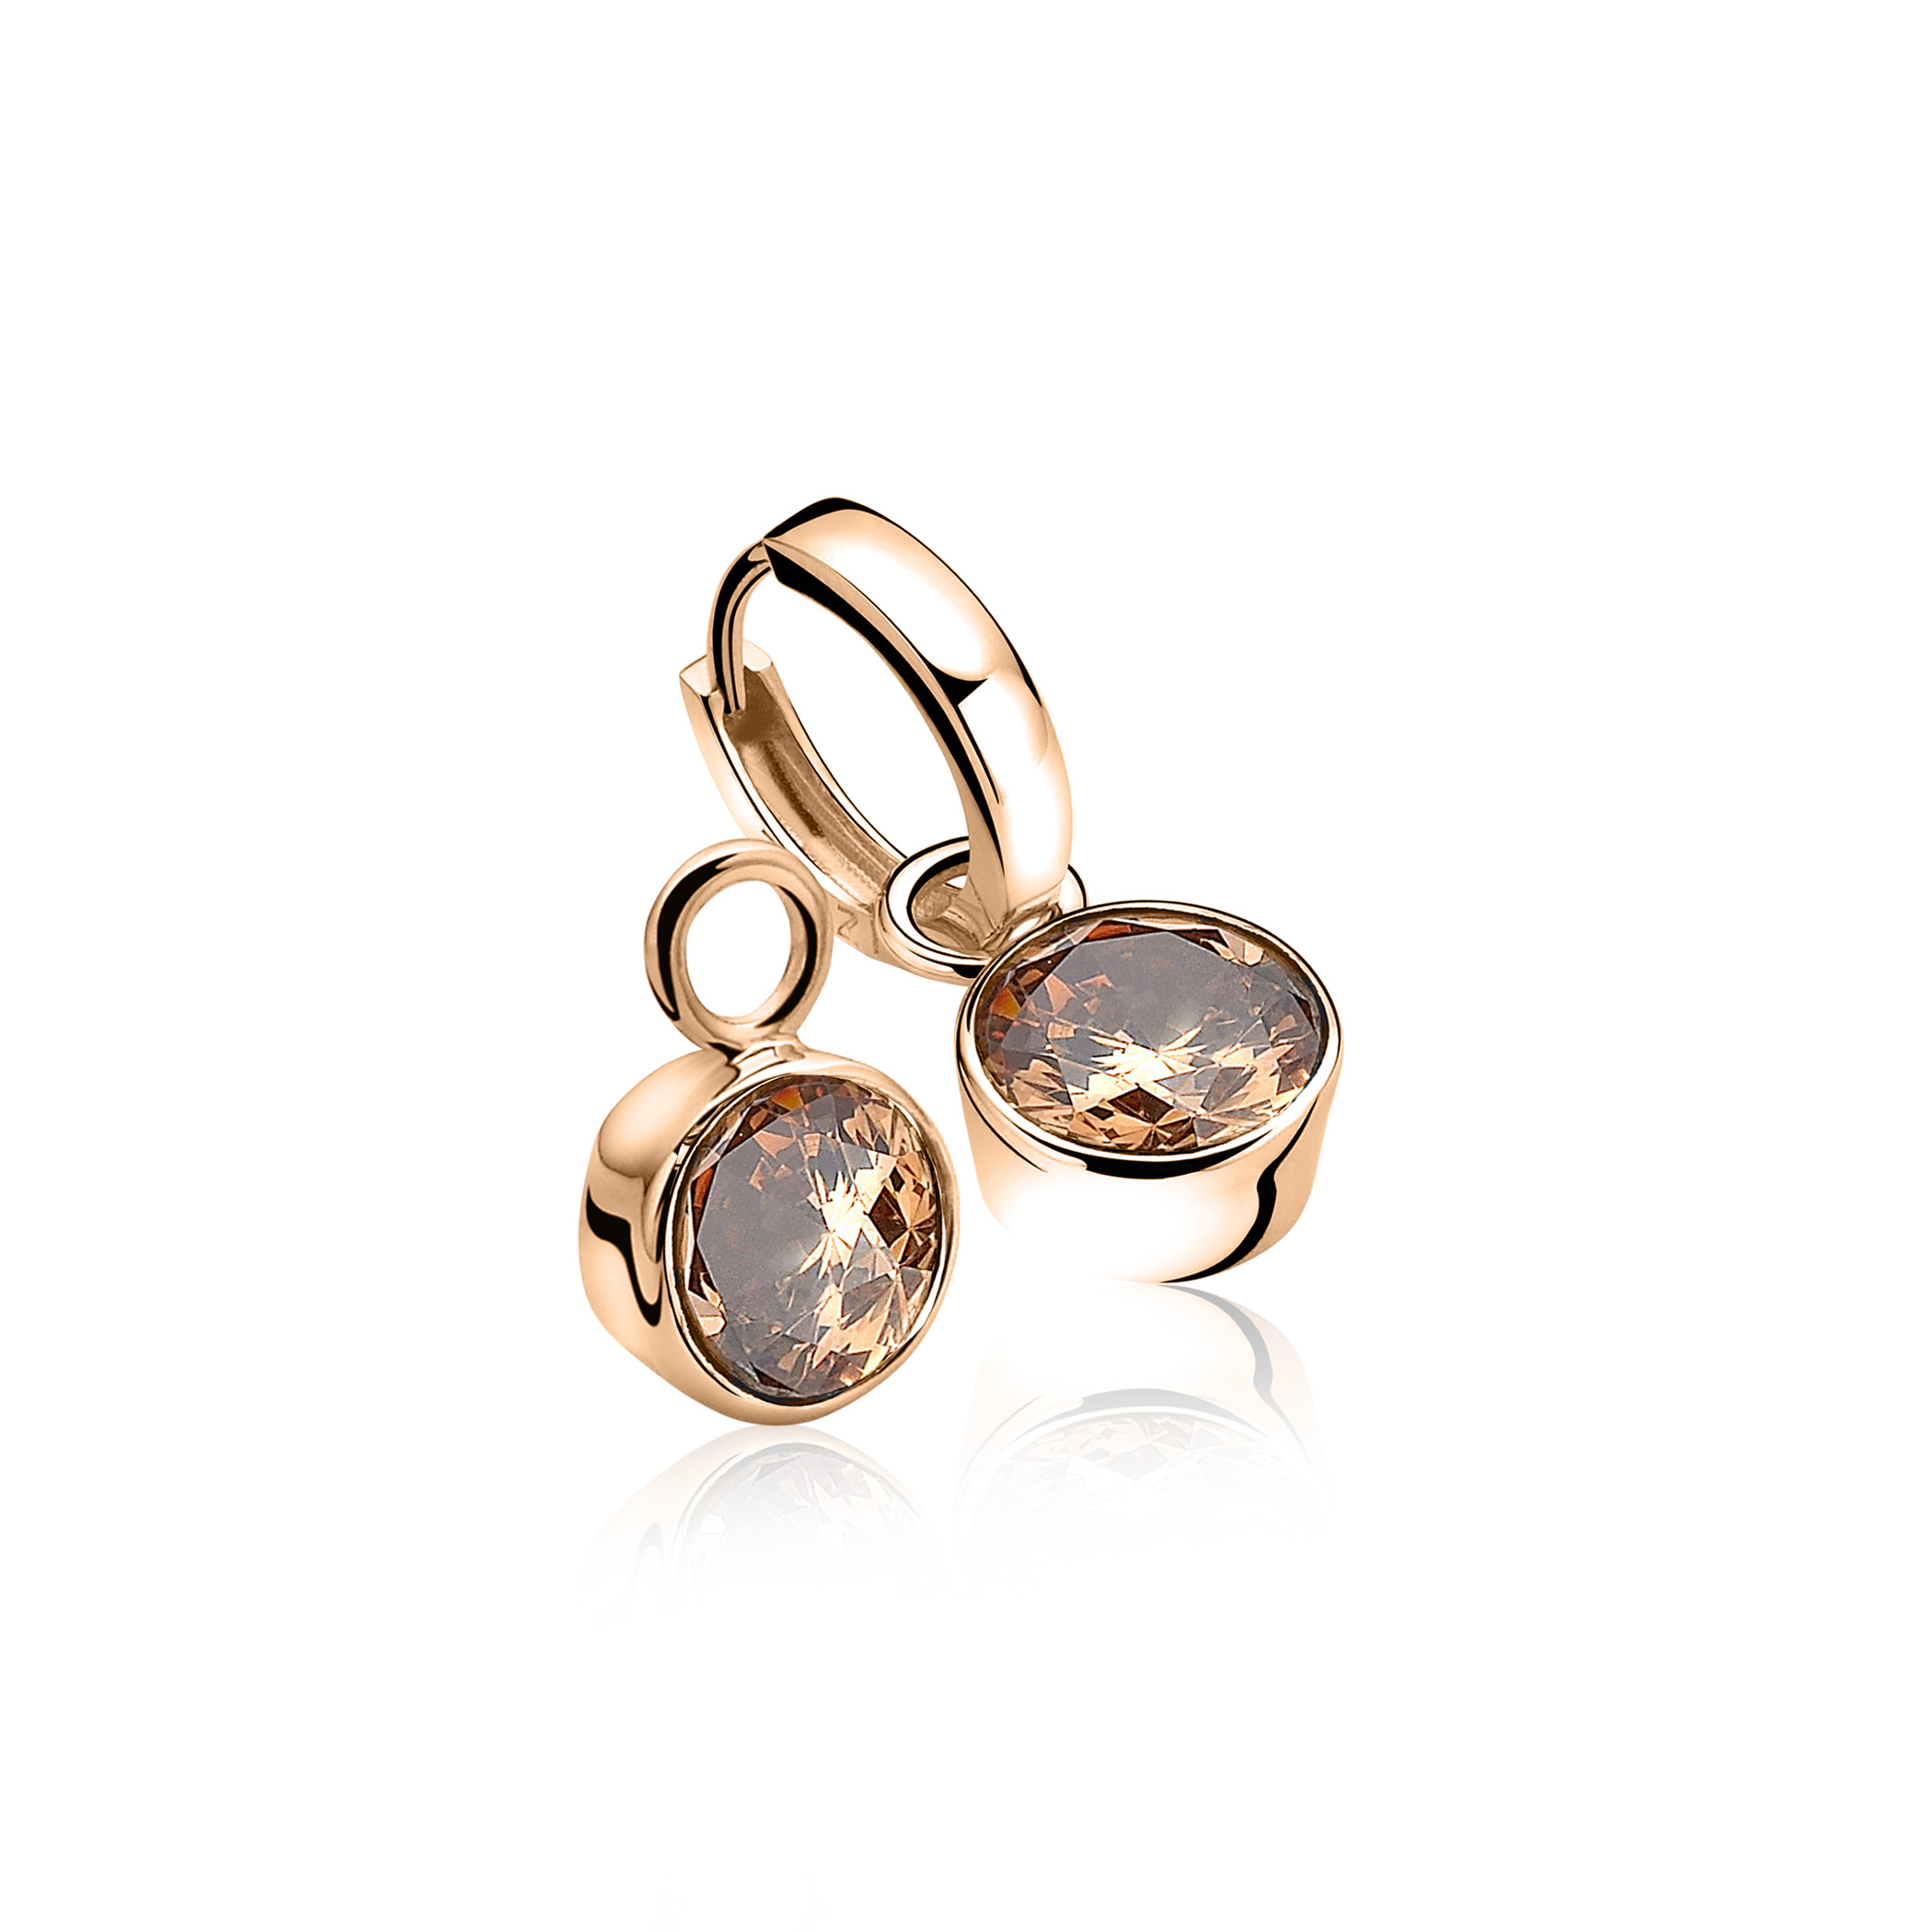 ZINZI Rose Plated Sterling Silver Earrings Pendants Champagne ZICH186CR (excl. hoop earrings)